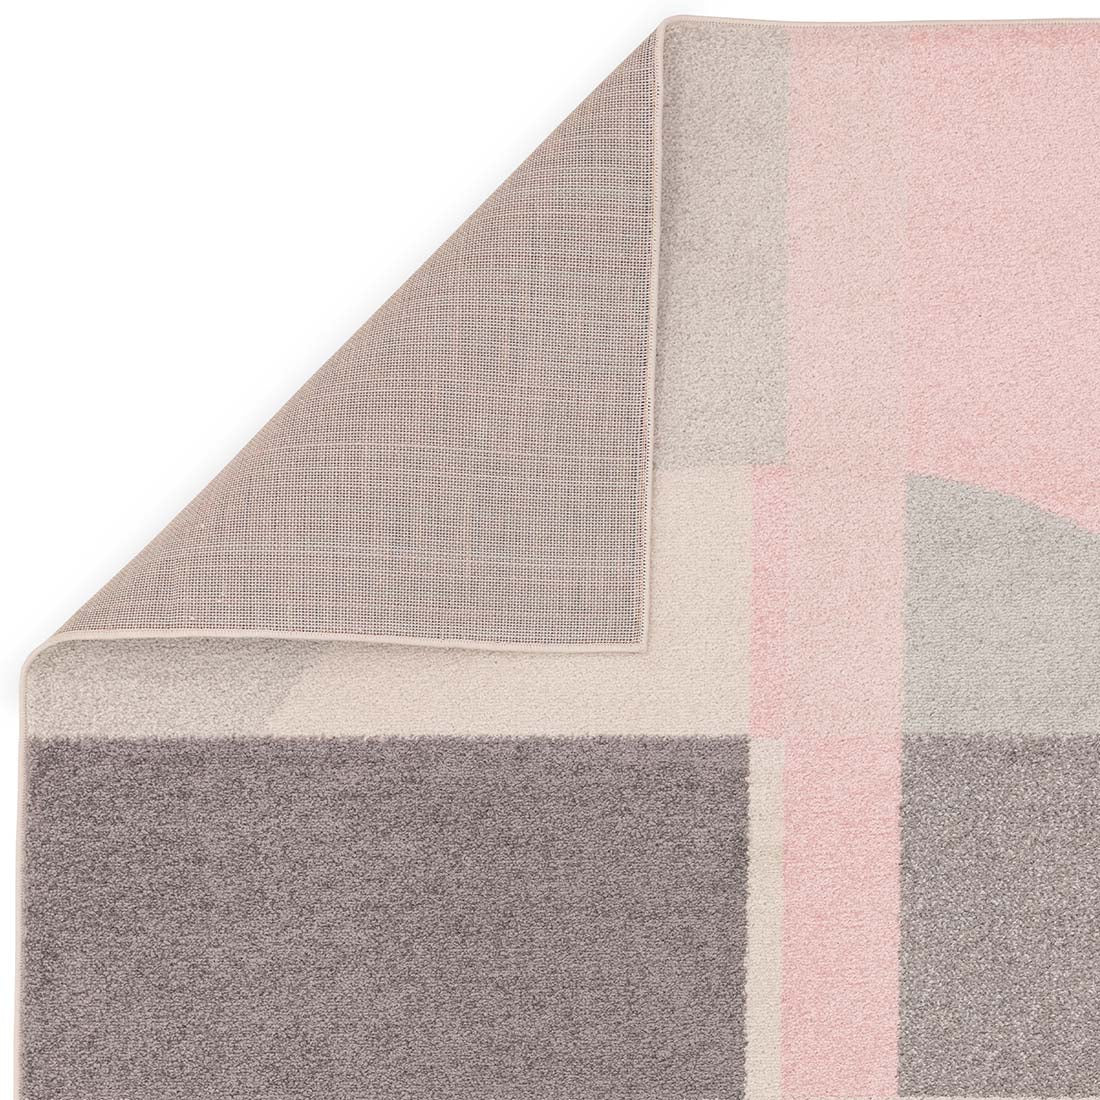 geometric pink flatweave rug
